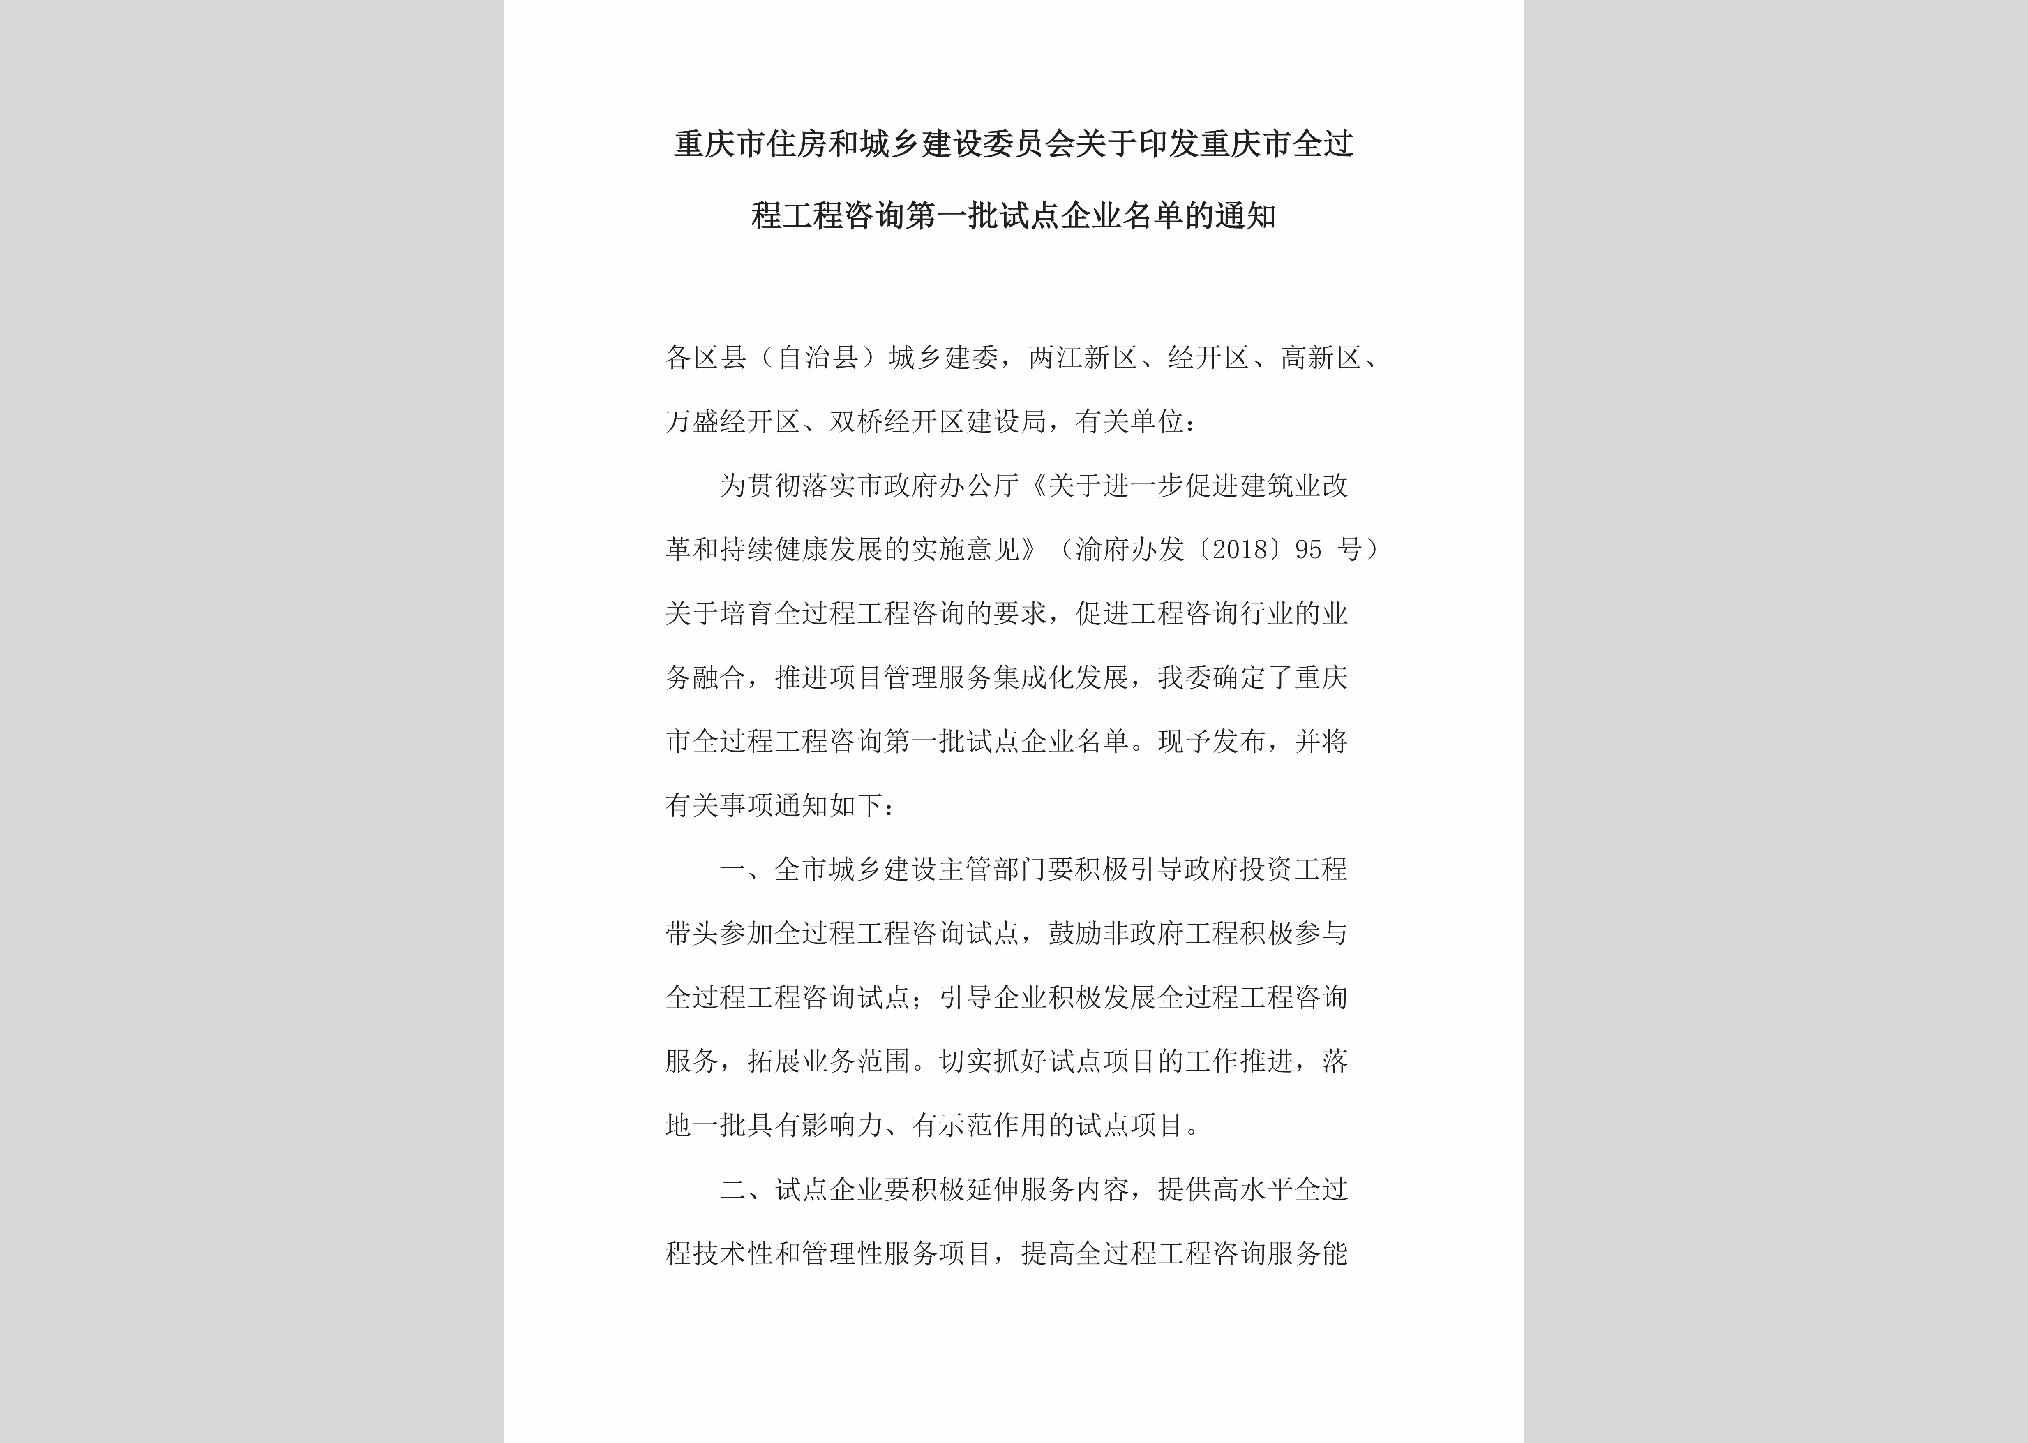 CQ-QGCGCZXD-2018：关于印发重庆市全过程工程咨询第一批试点企业名单的通知